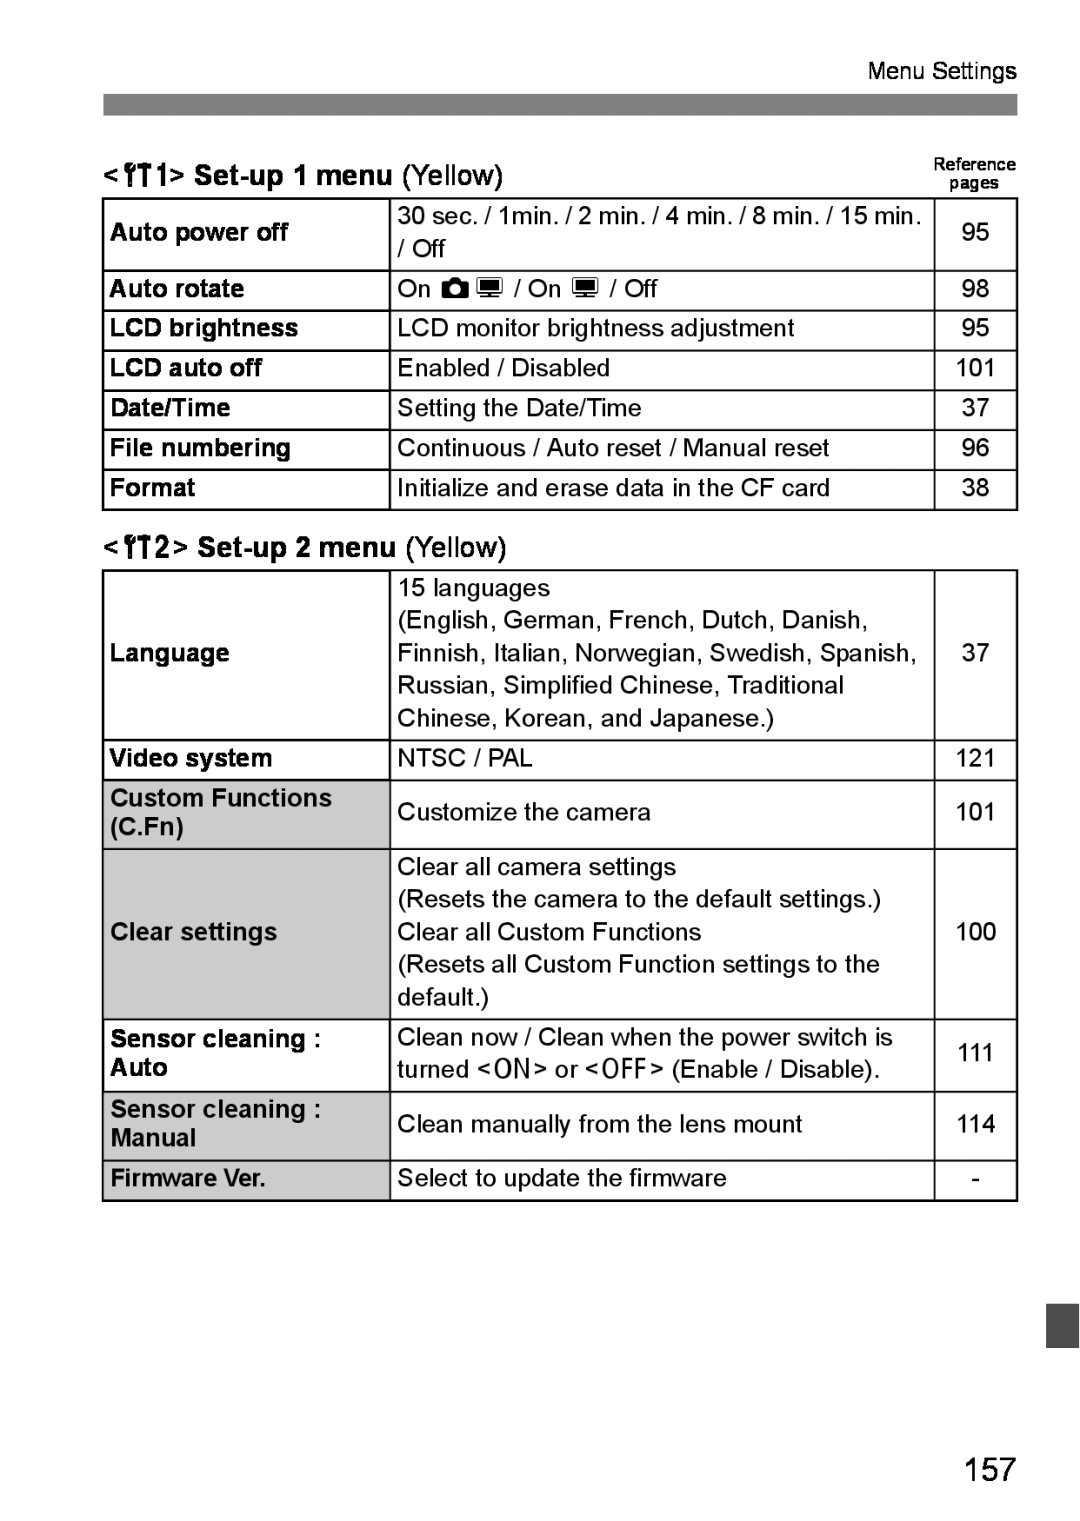 Canon EOS DIGITAL REBEL XTI instruction manual c Set-up 1 menu Yellow, b Set-up 2 menu Yellow 